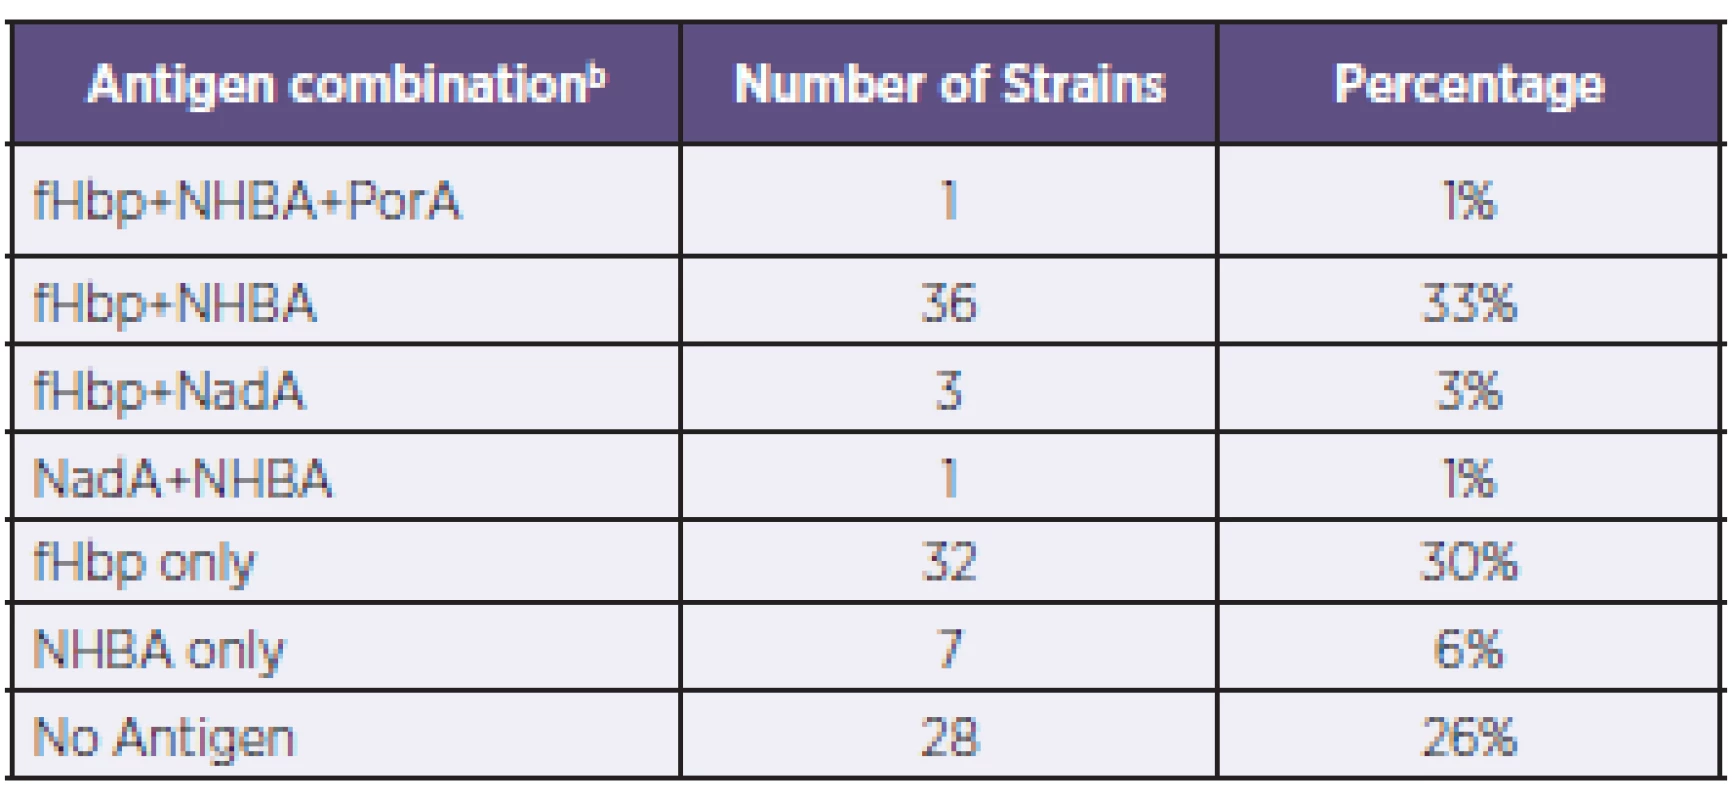 Coverage of N. meningitidis B strains by antigen combination<sup>a</sup>, Czech Republic, 2007–2010
Tabulka 1. Pokrytí kmenů N. meningitidis B vakcínou 4CMenB podle kombinací antigenů<sup>a</sup>, Česká republika, 2007–2010